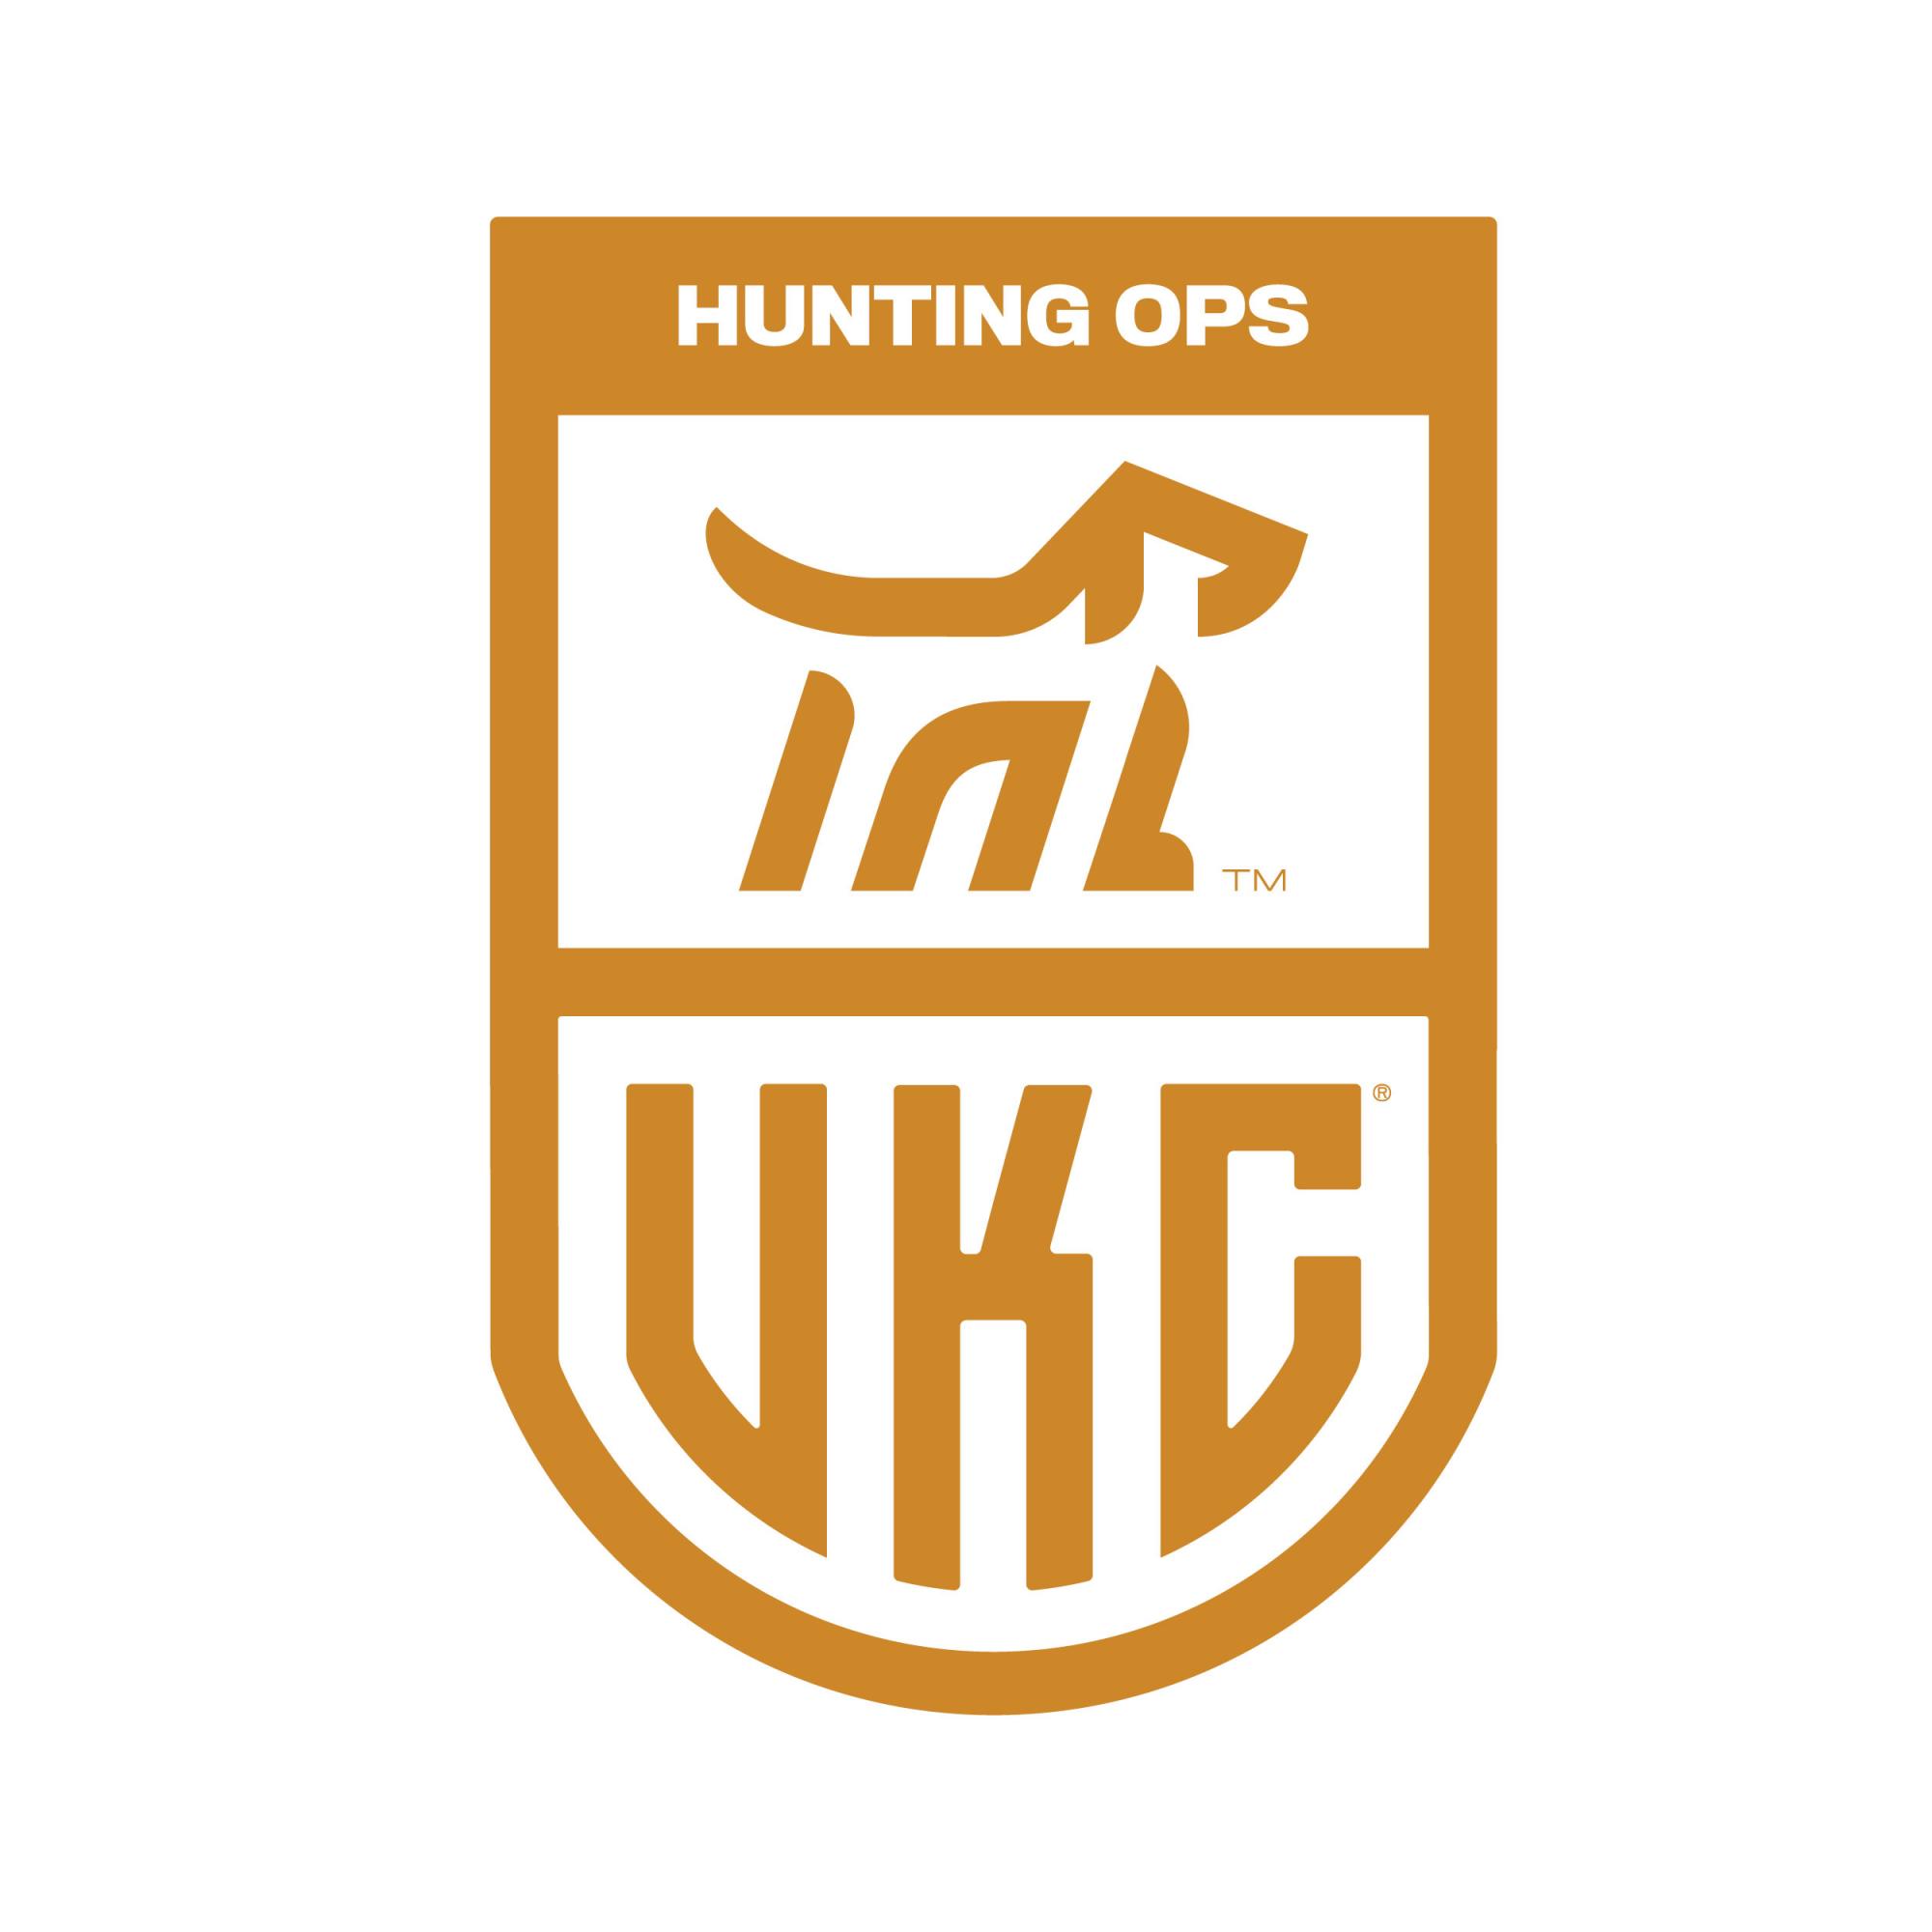 ukc-logo-hunting-ops